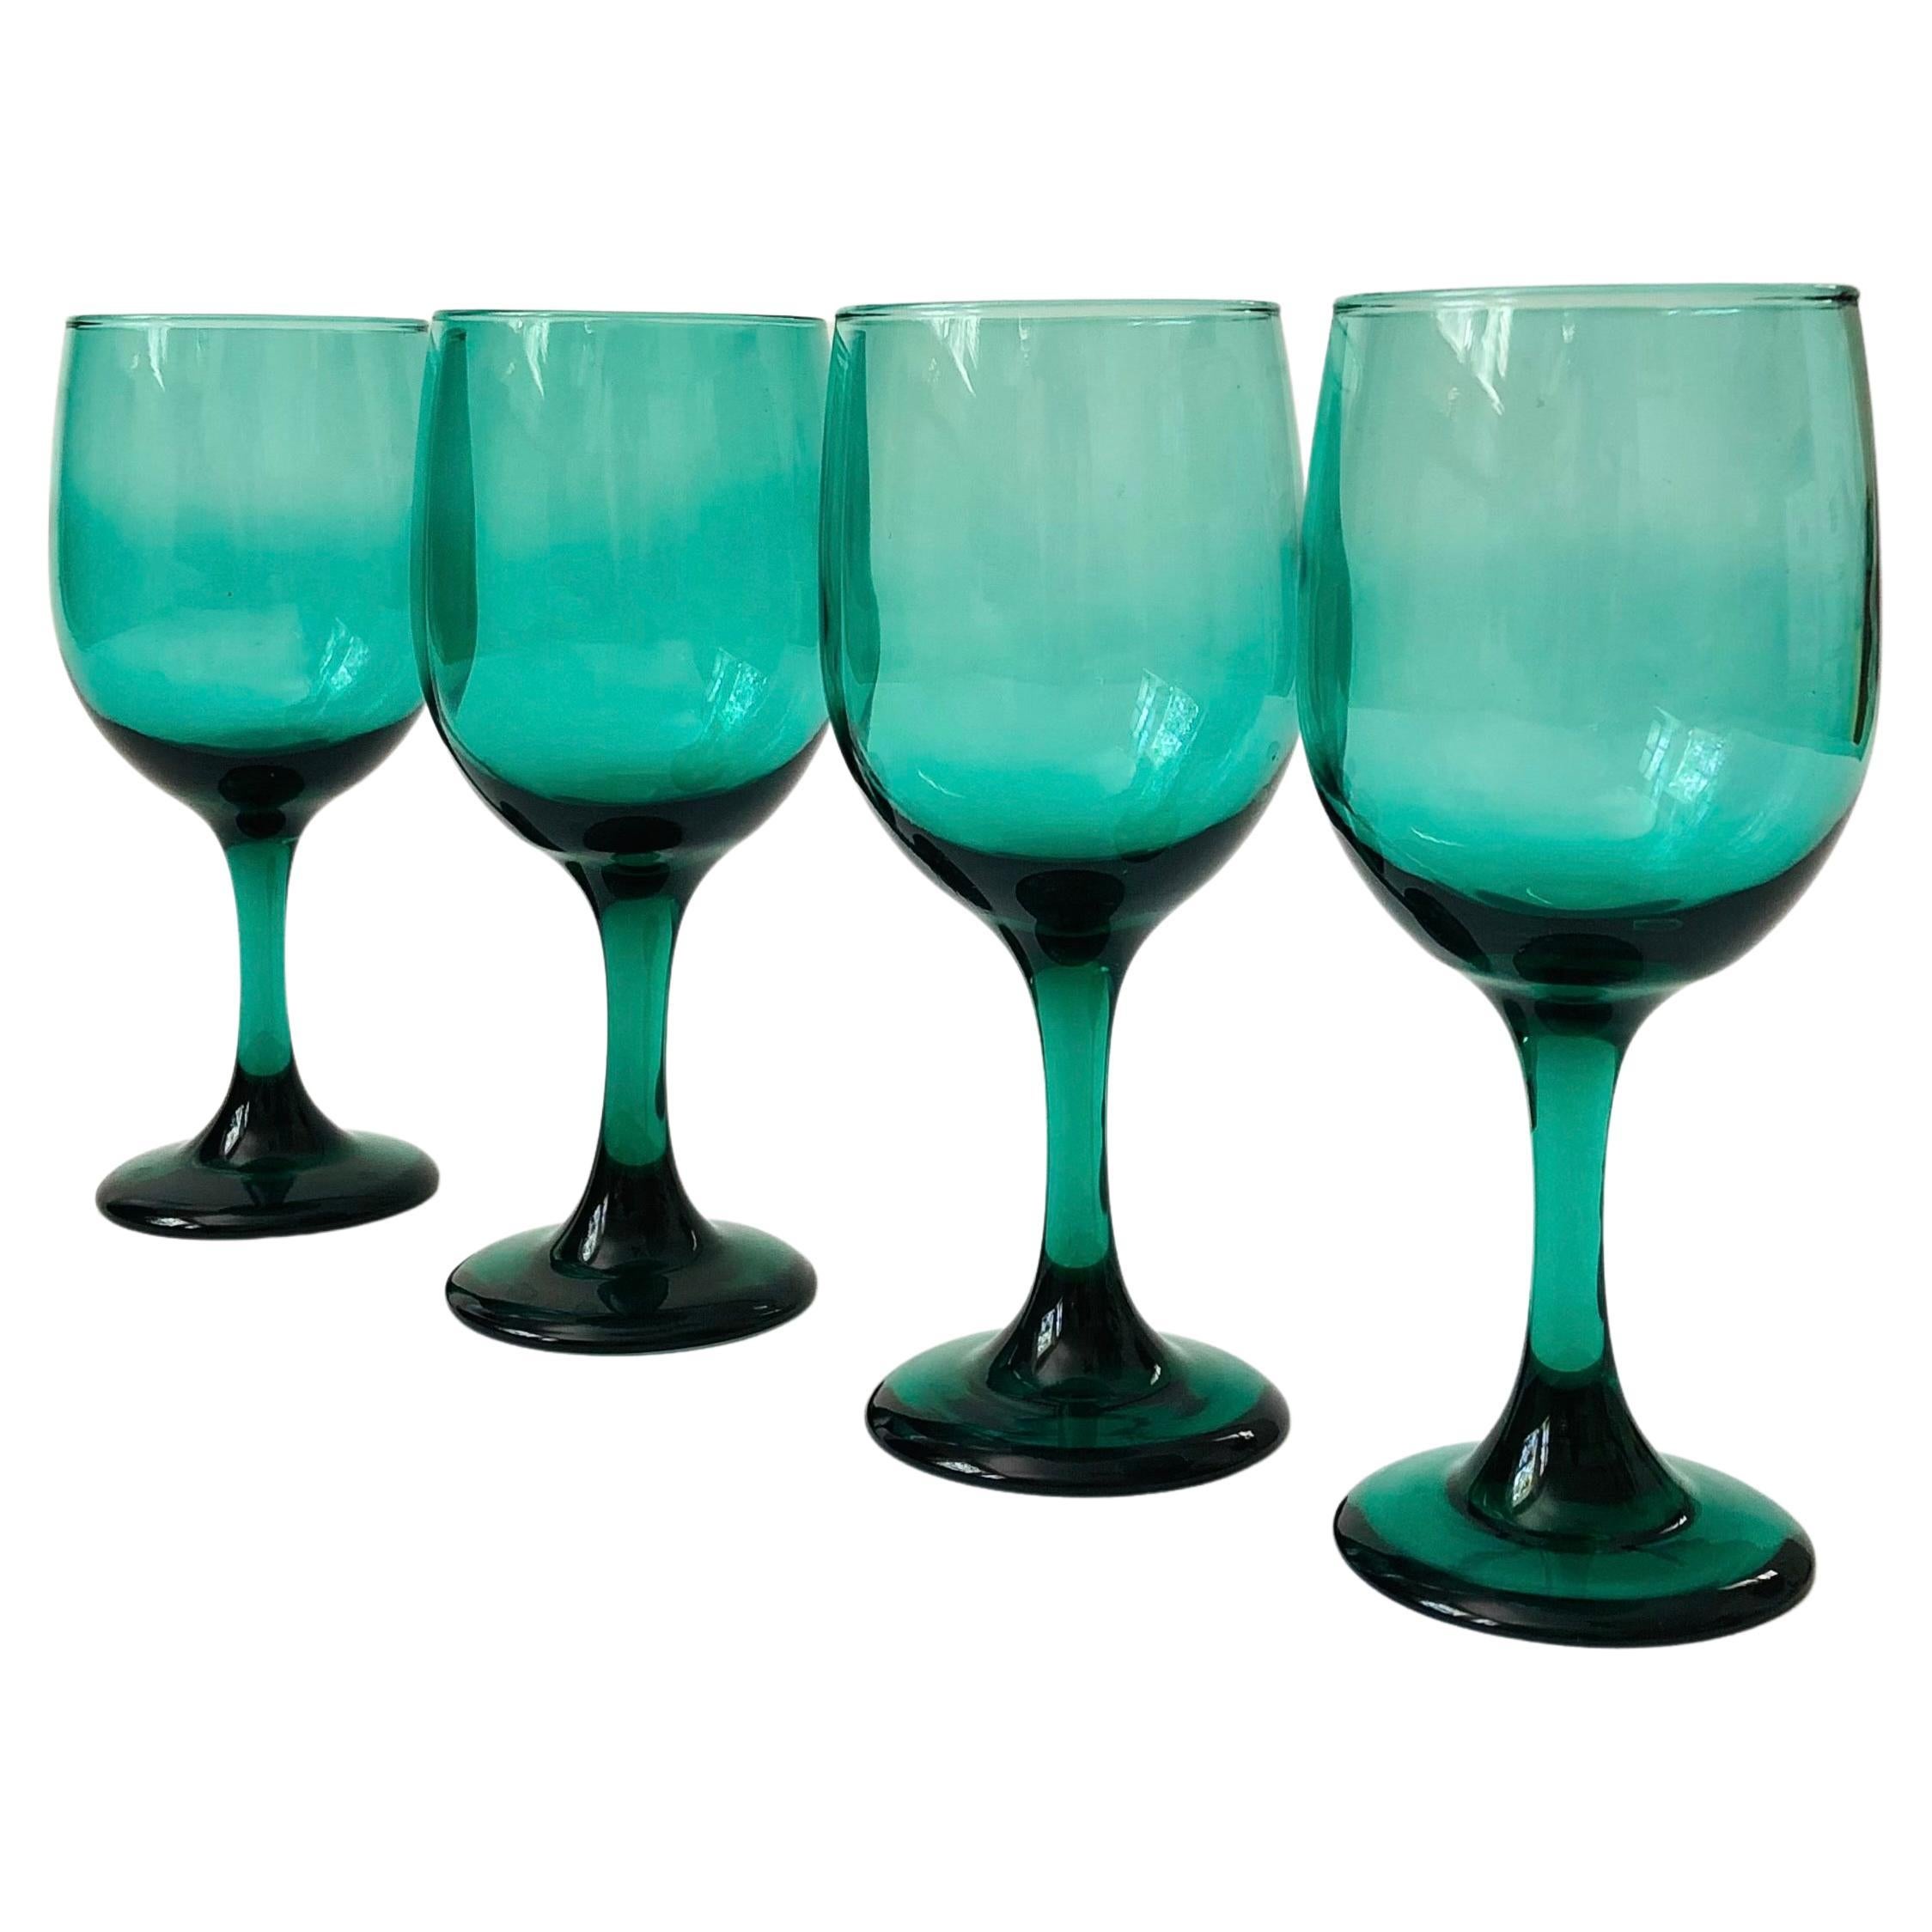 Emerald Green Wine Glasses - Set of 4